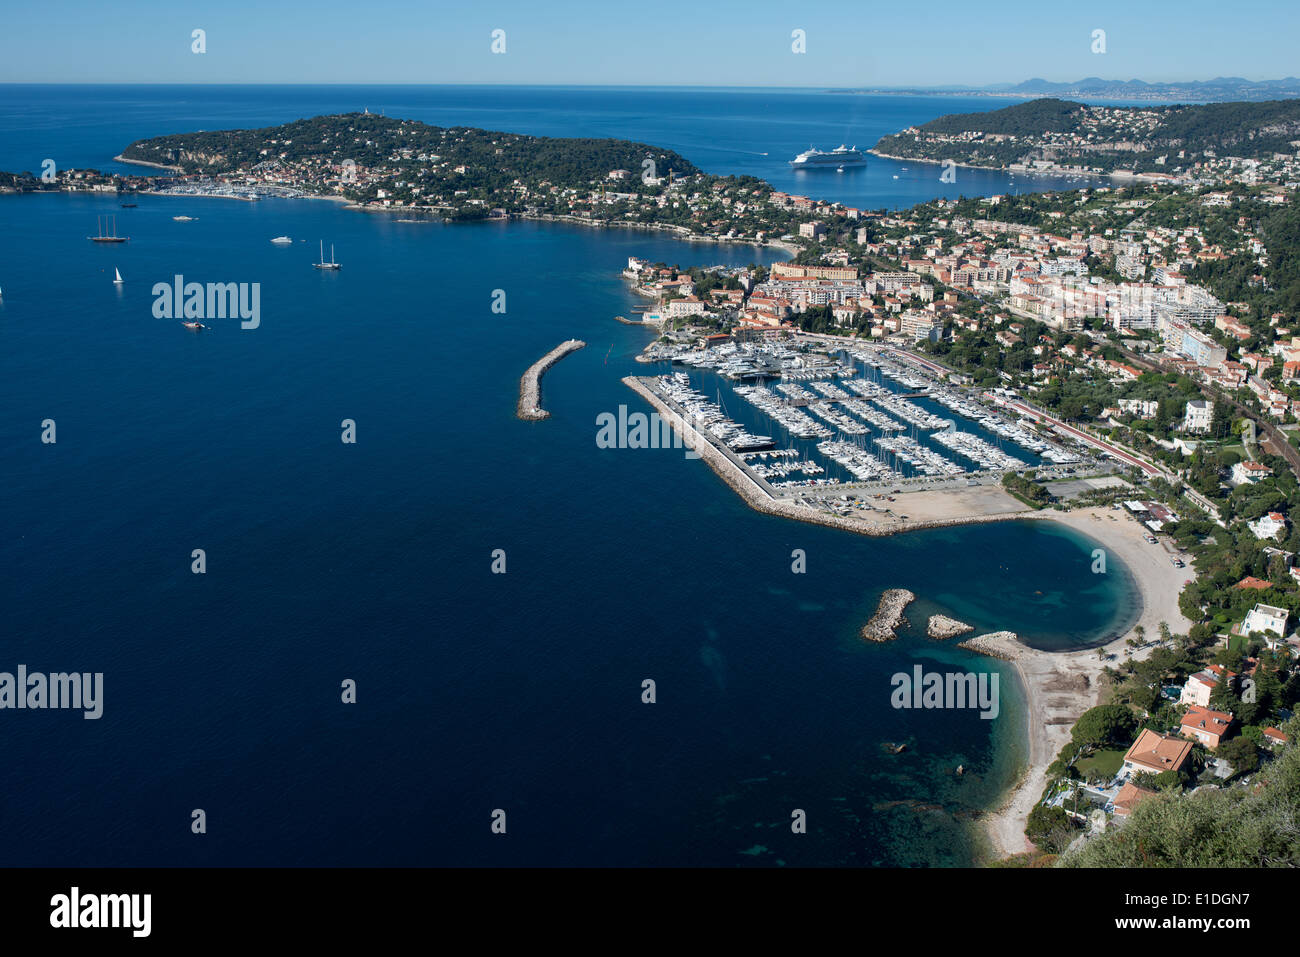 The marina of Beaulieu-sur-Mer and the village of Saint-Jean-Cap-Ferrat on the peninsula. Alpes-Maritimes, French Riviera, France. Stock Photo